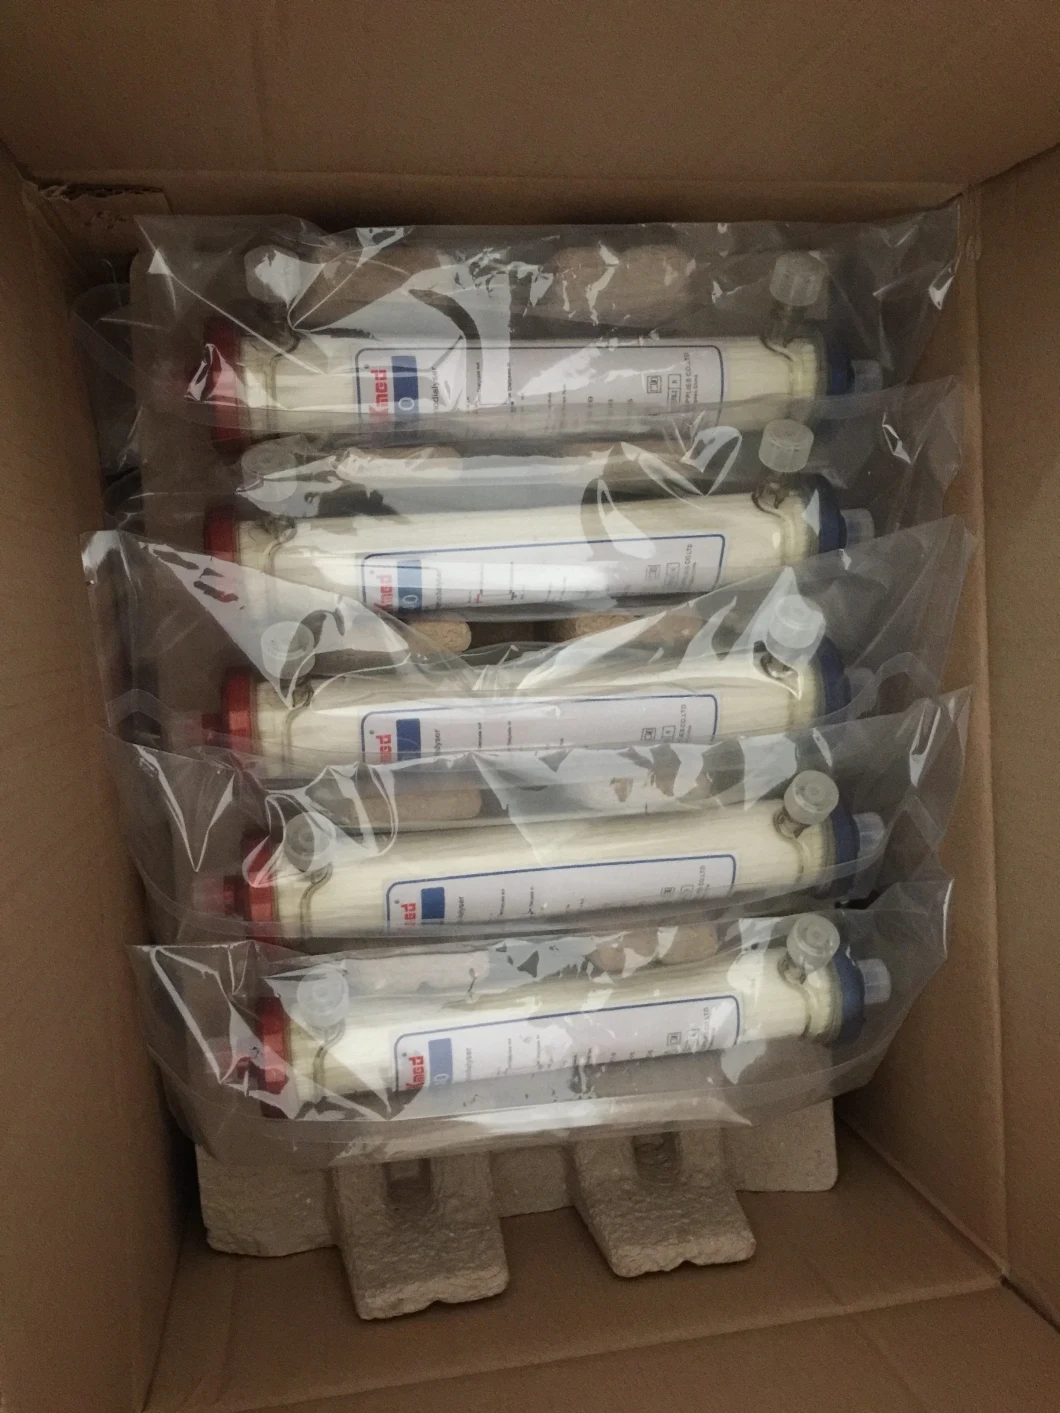 Disposable Medical Double Lumen Hemodialysis Dialysis Catheter Kit Factory Supply